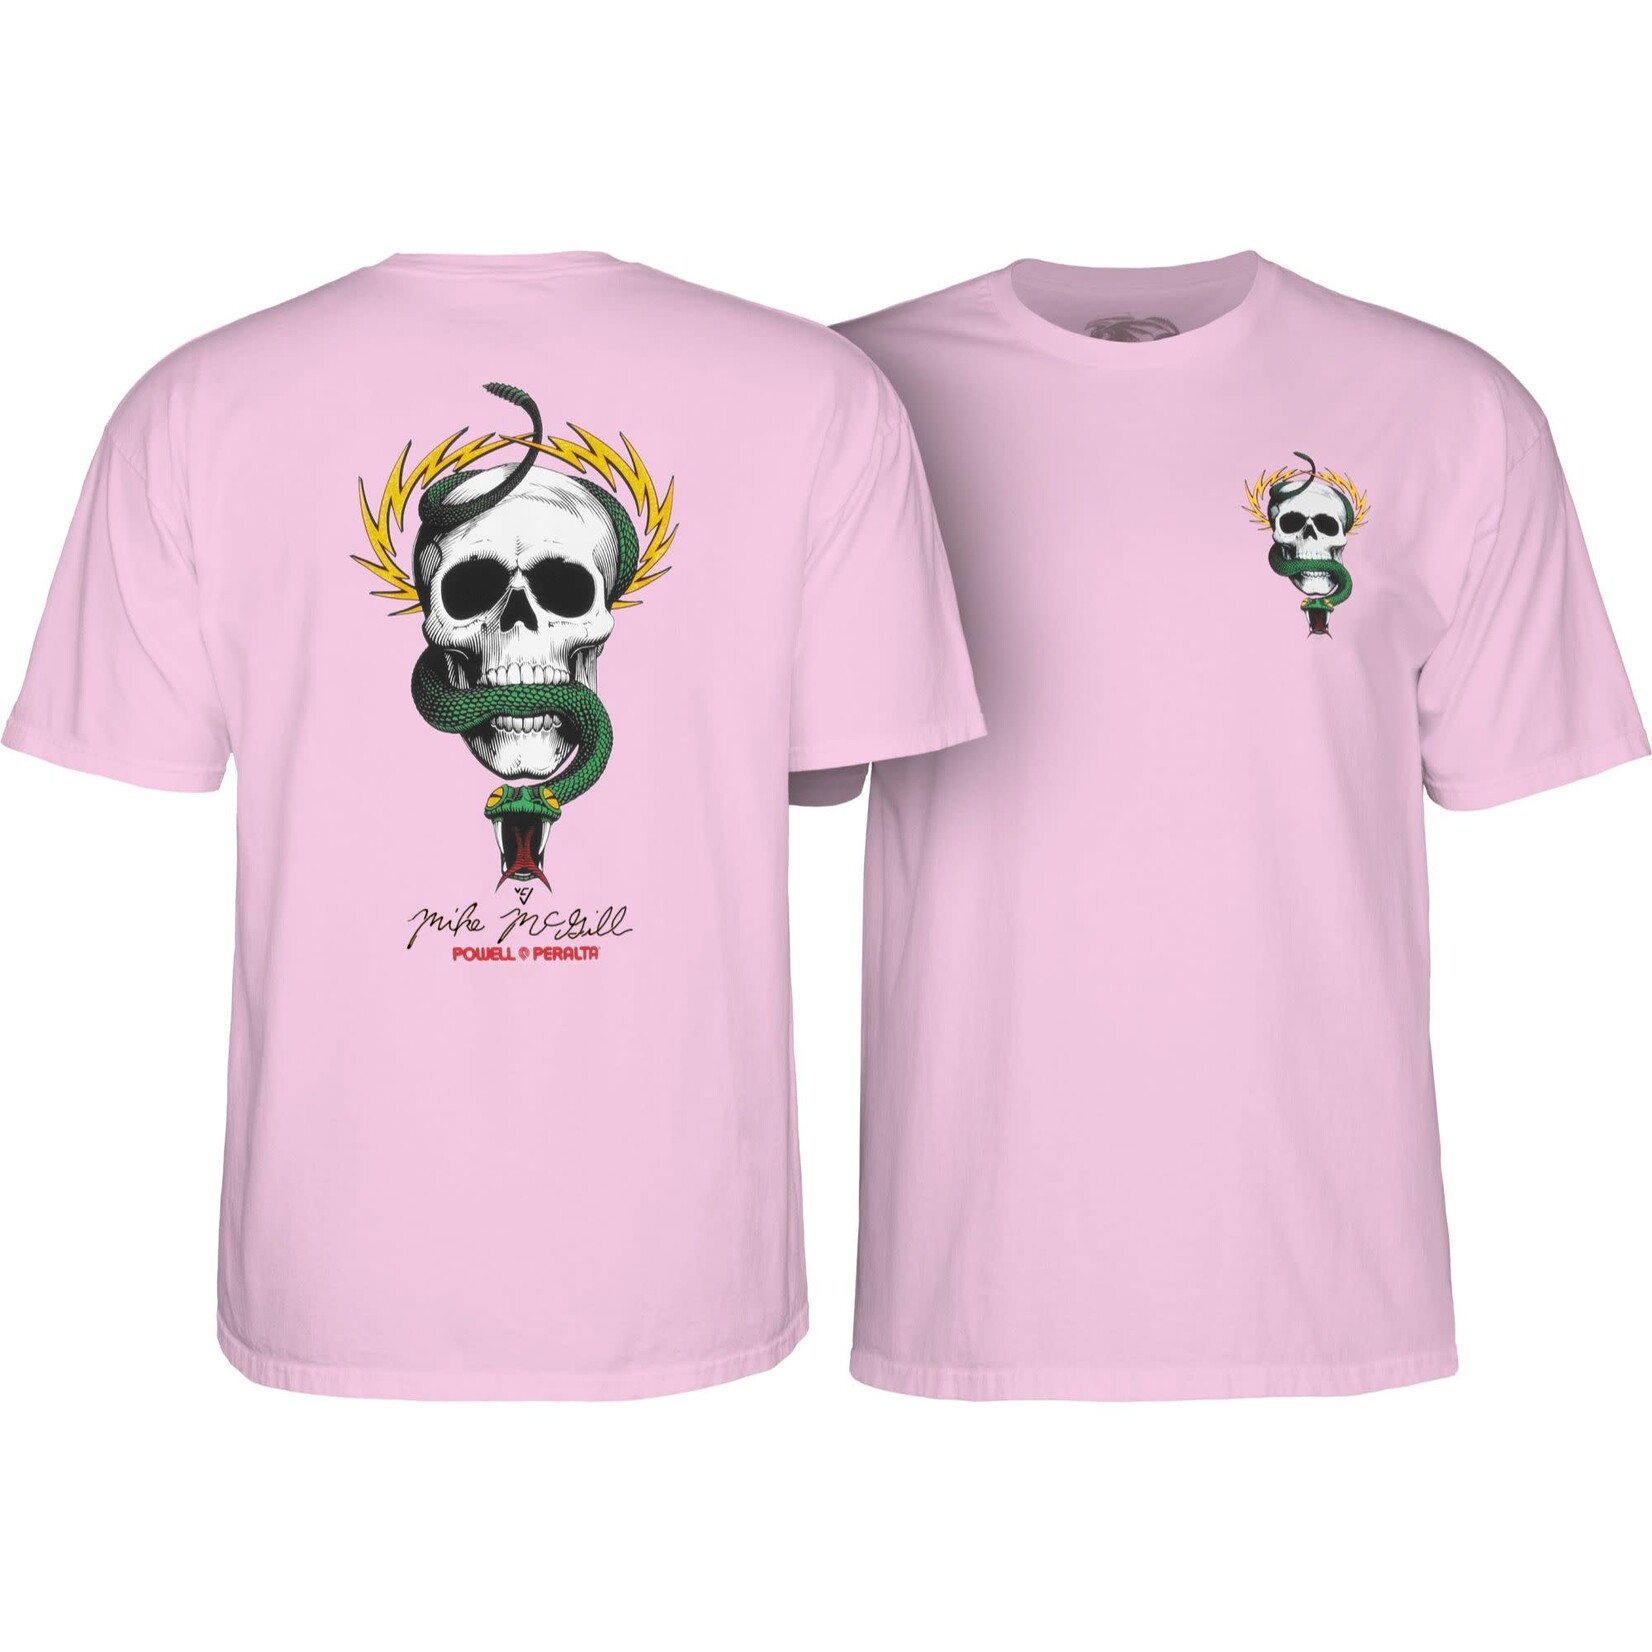 Powell Peralta Powell McGill Skull & Snake T-Shirt - Light Pink -